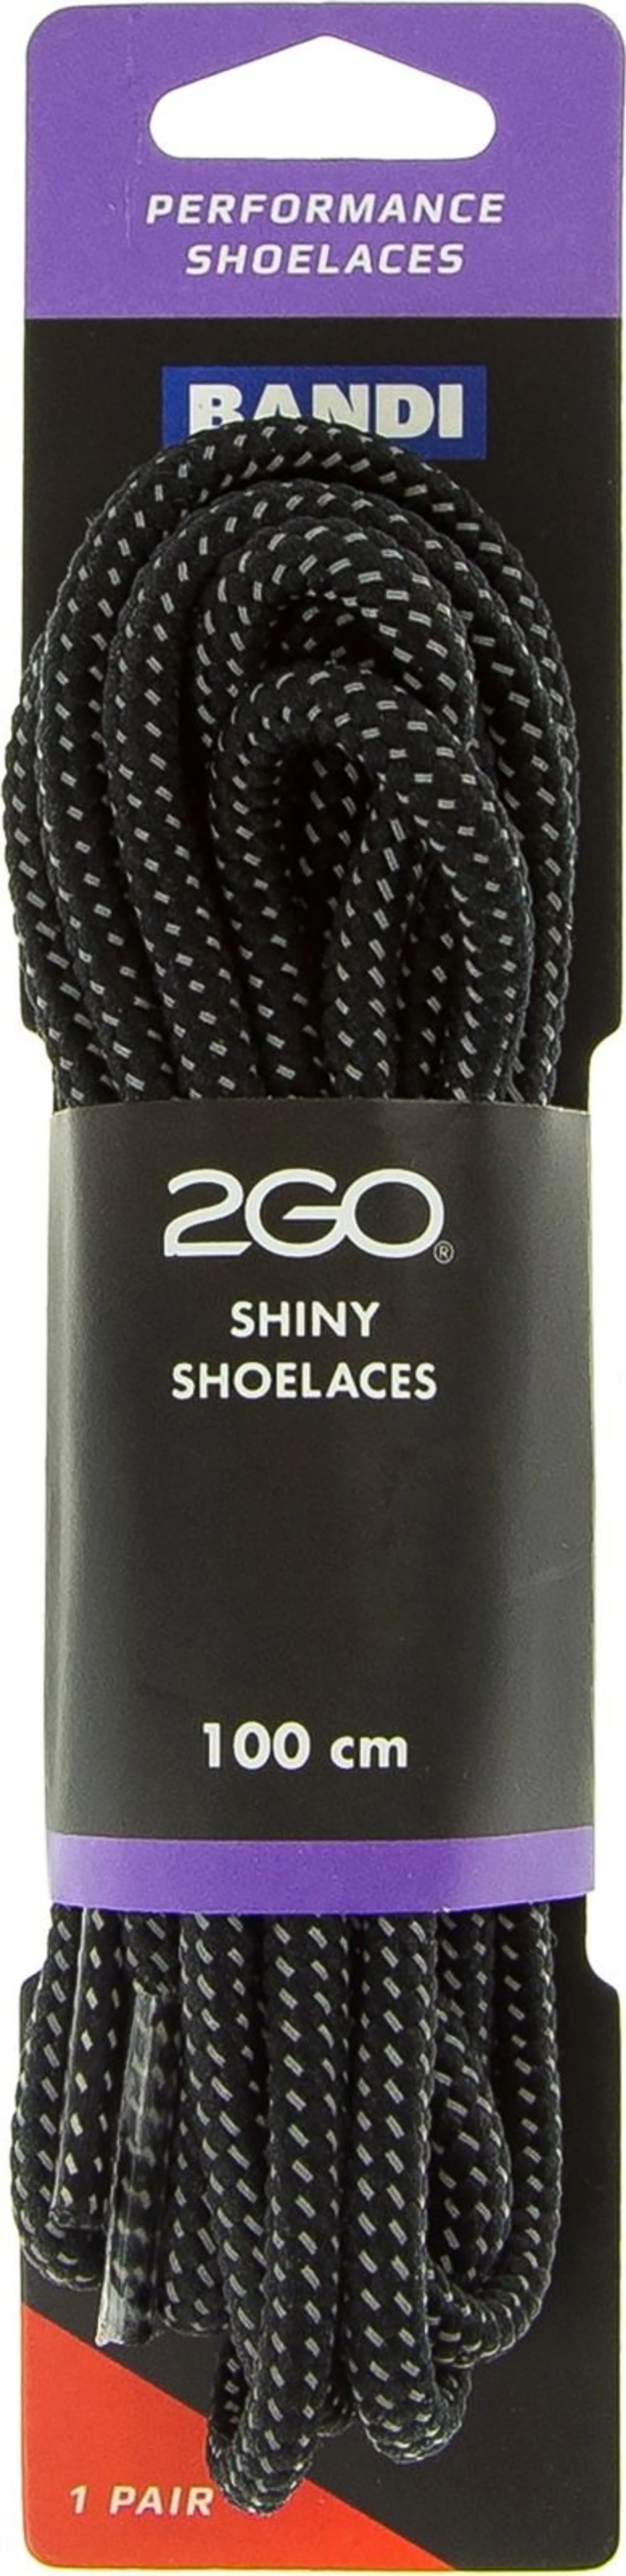 Bandi 2GO heijastavat kengännauhat 100 cm musta